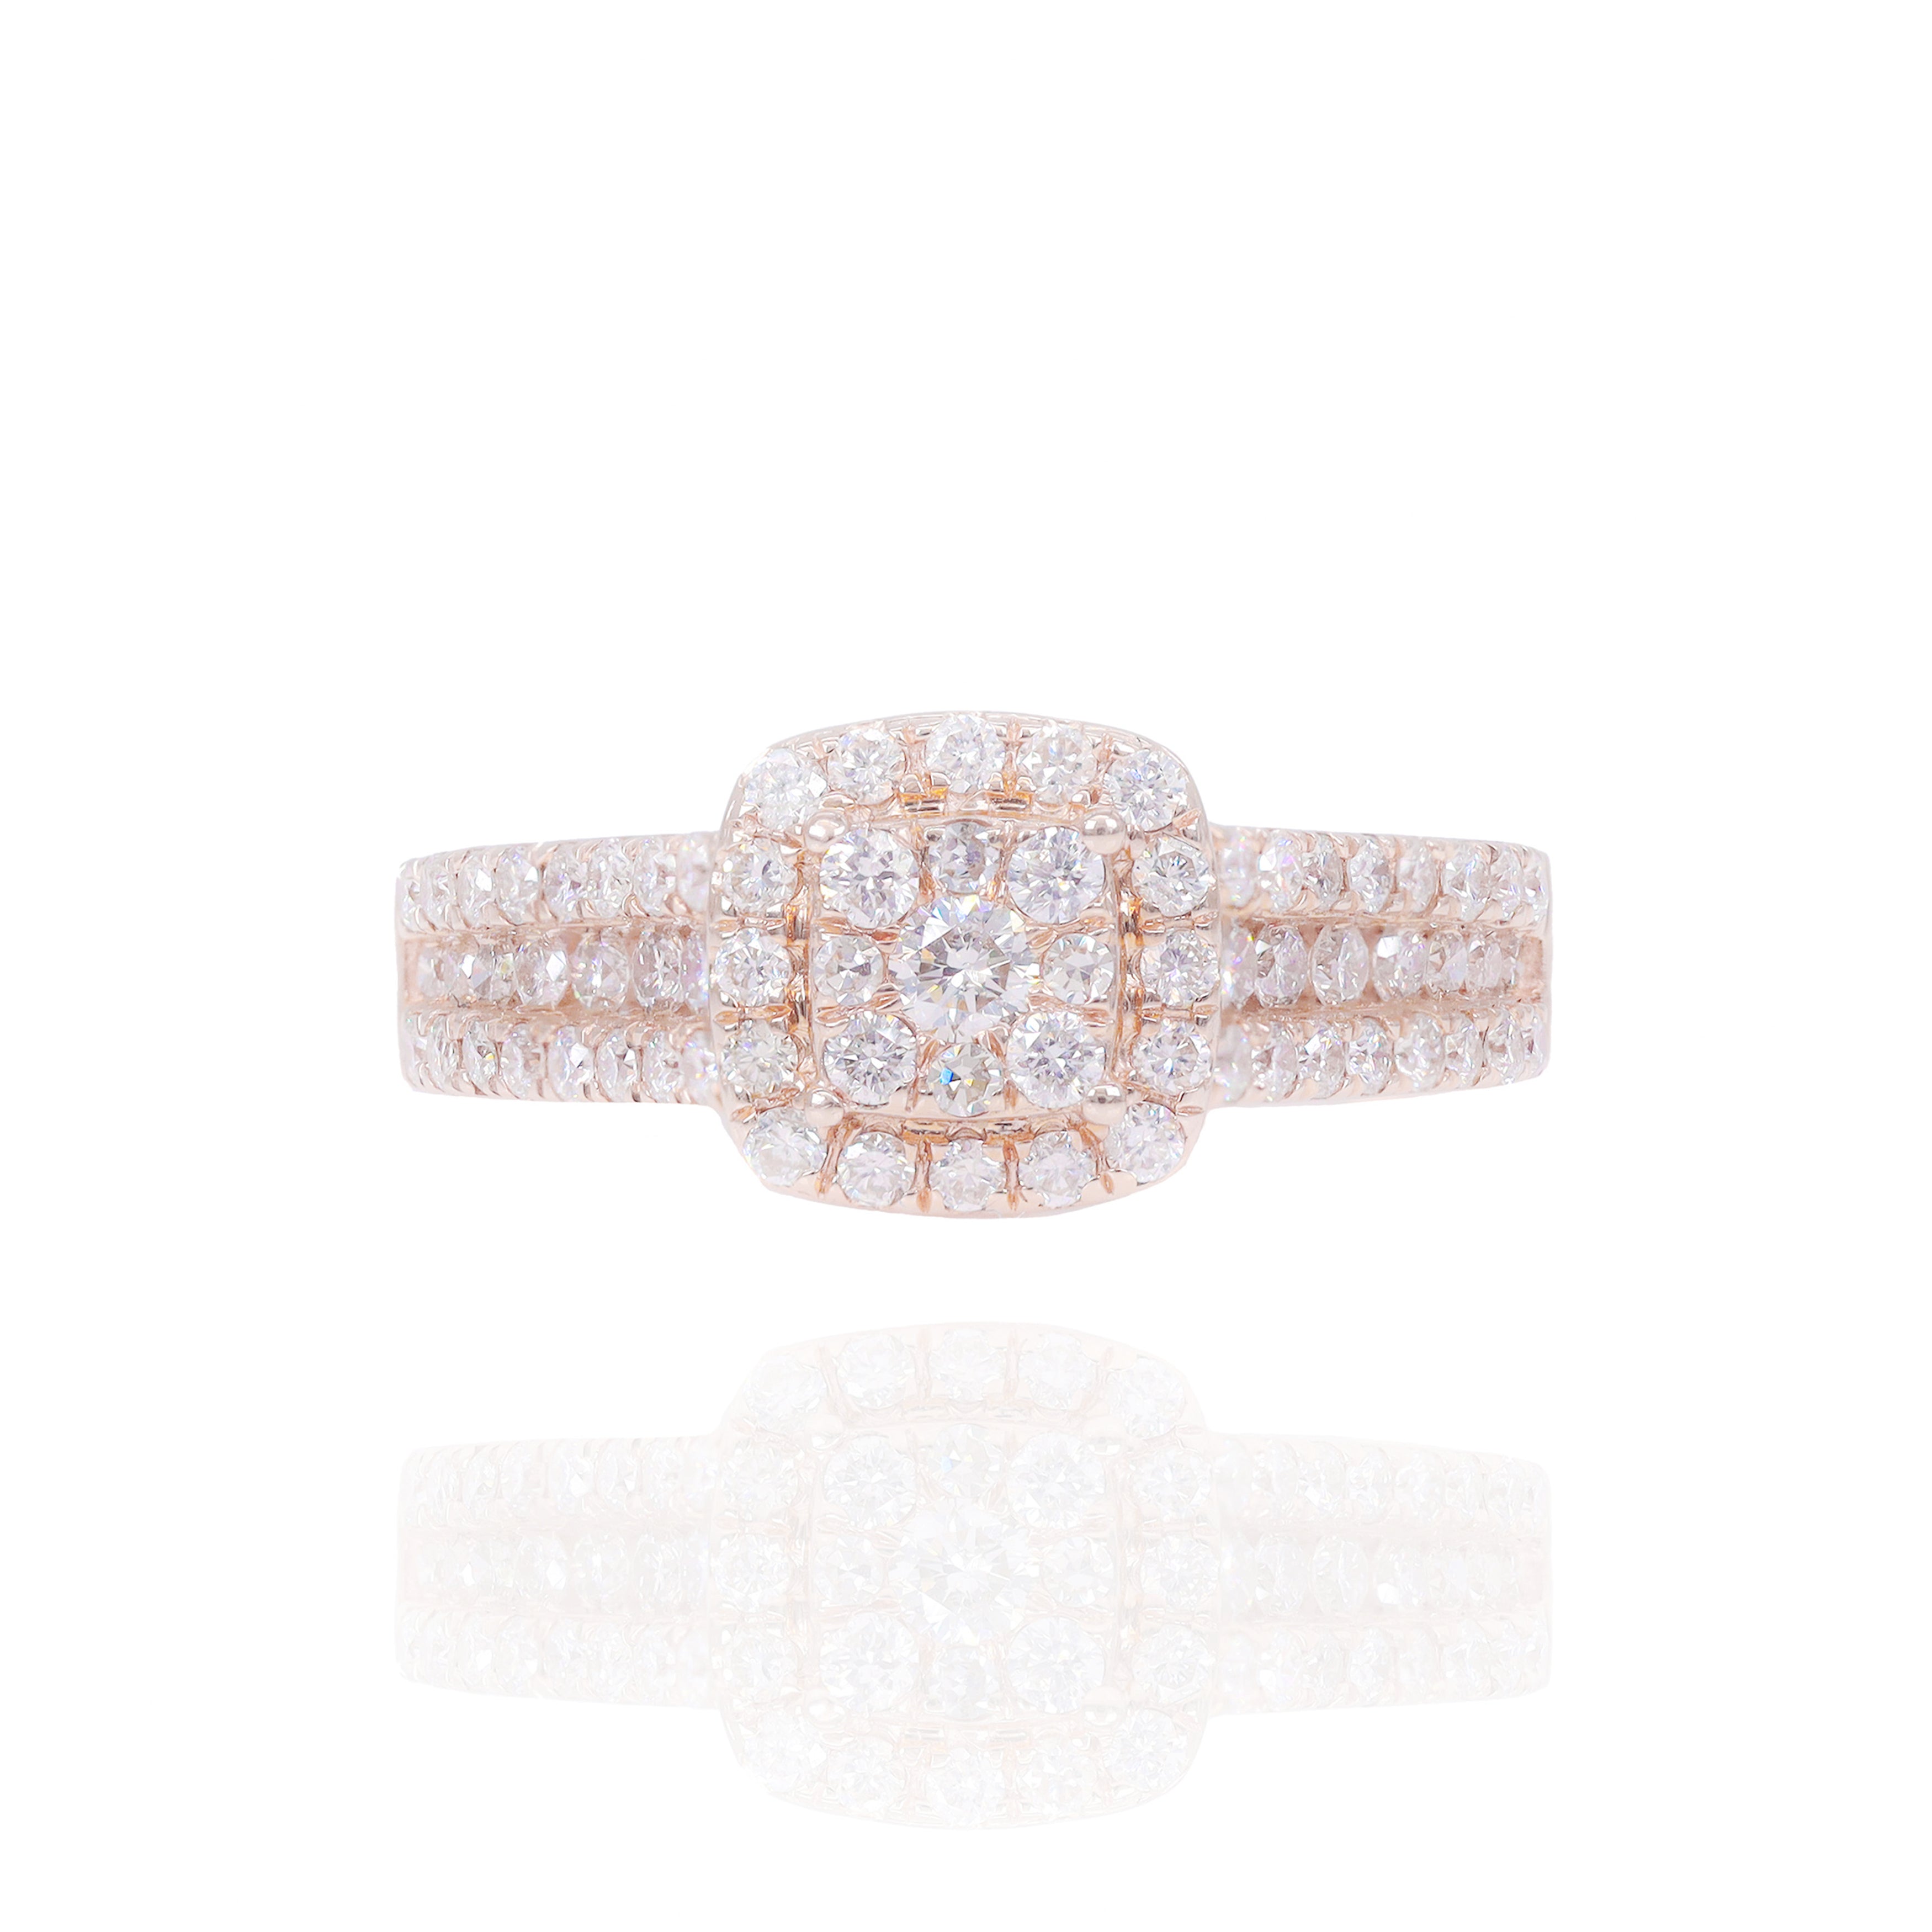 Princess Shape Diamond Engagement Ring with Halo and 3 Row Band